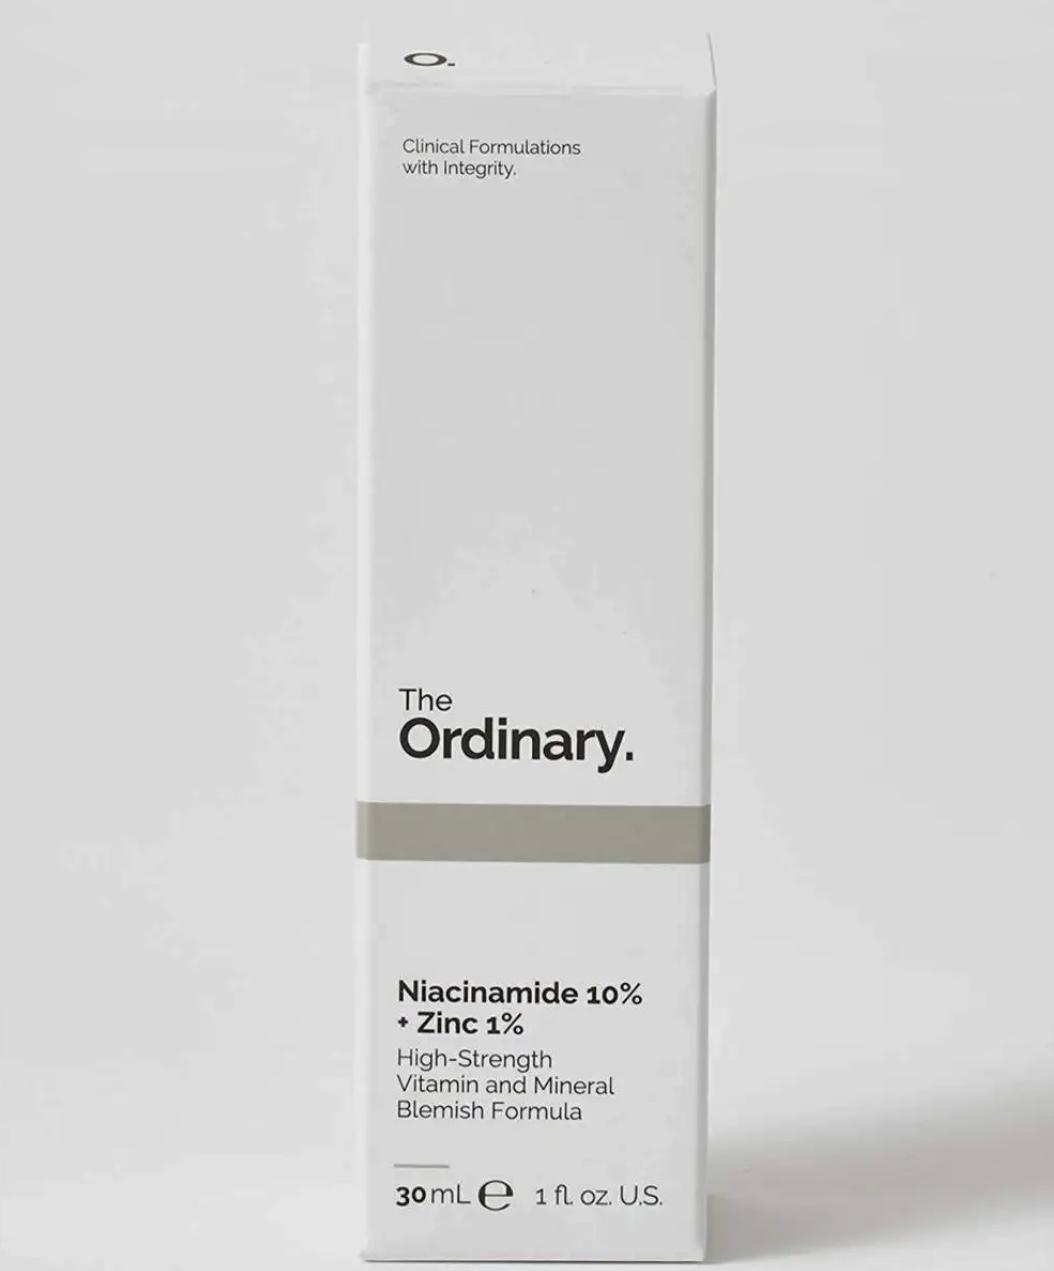 THE ORDINARY Niacinamide 10% + ZINC 1%  FACE SERUM